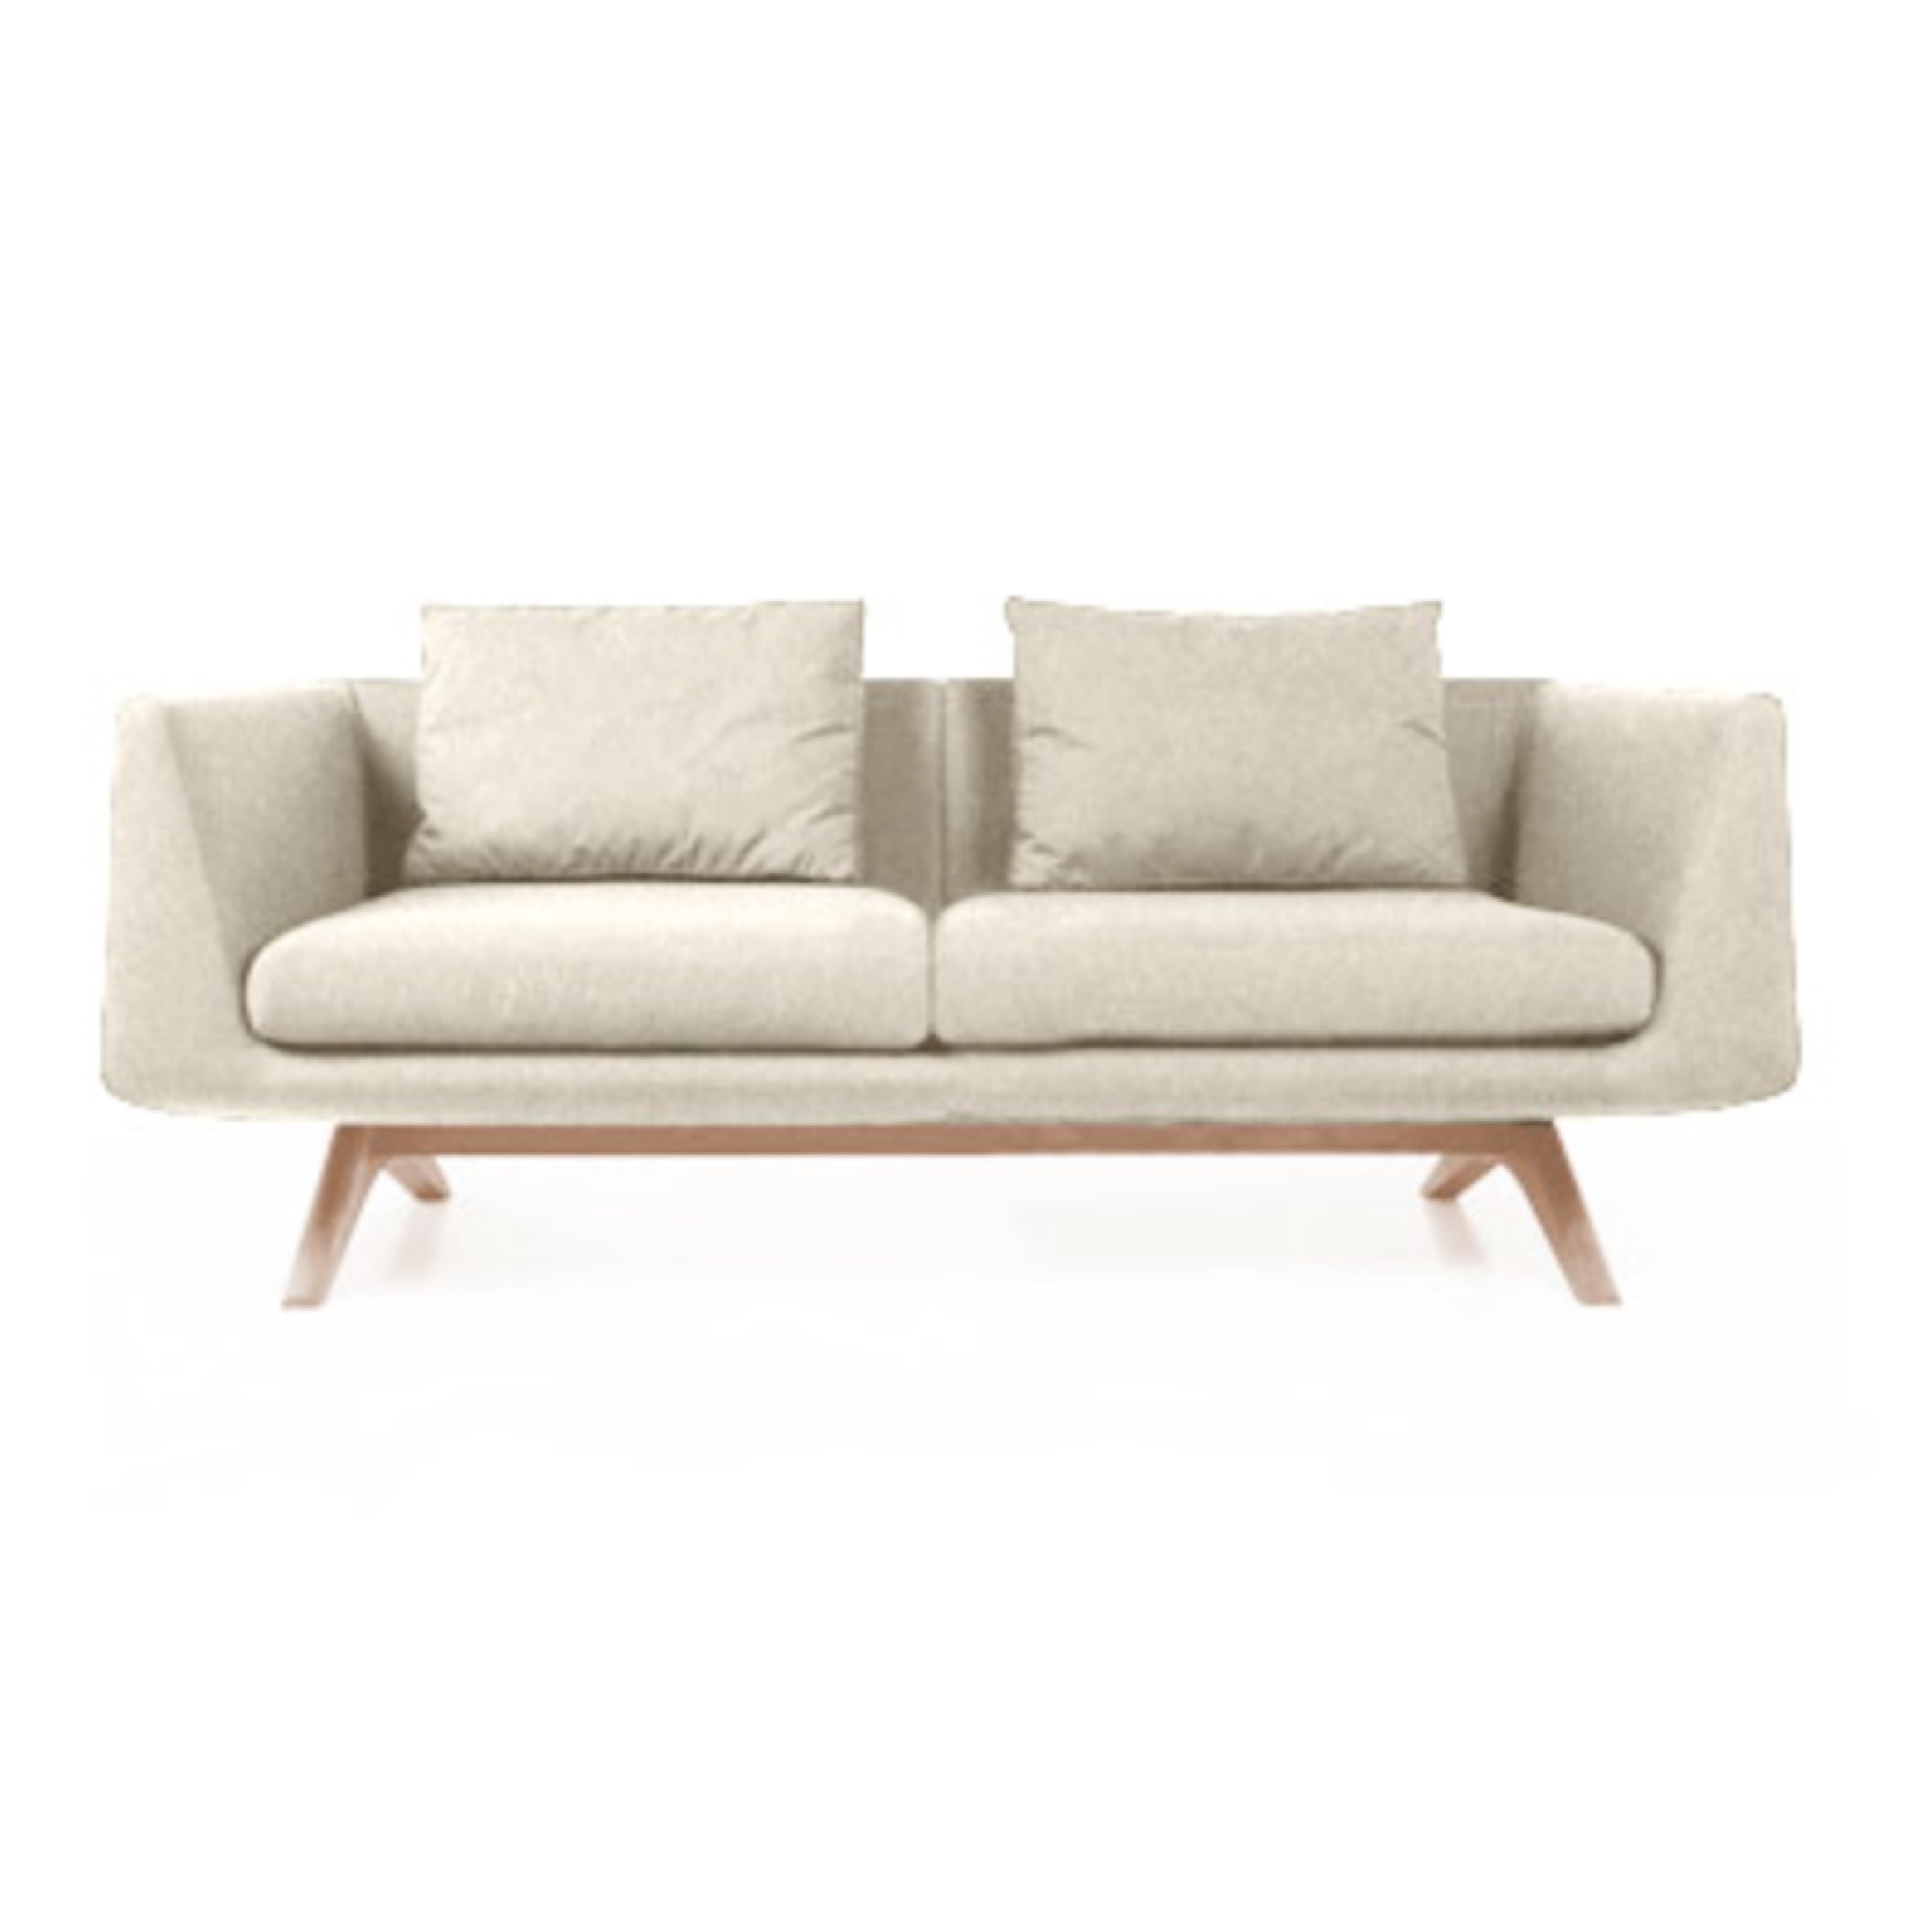 C-TR50022 Hepburn style Sofa